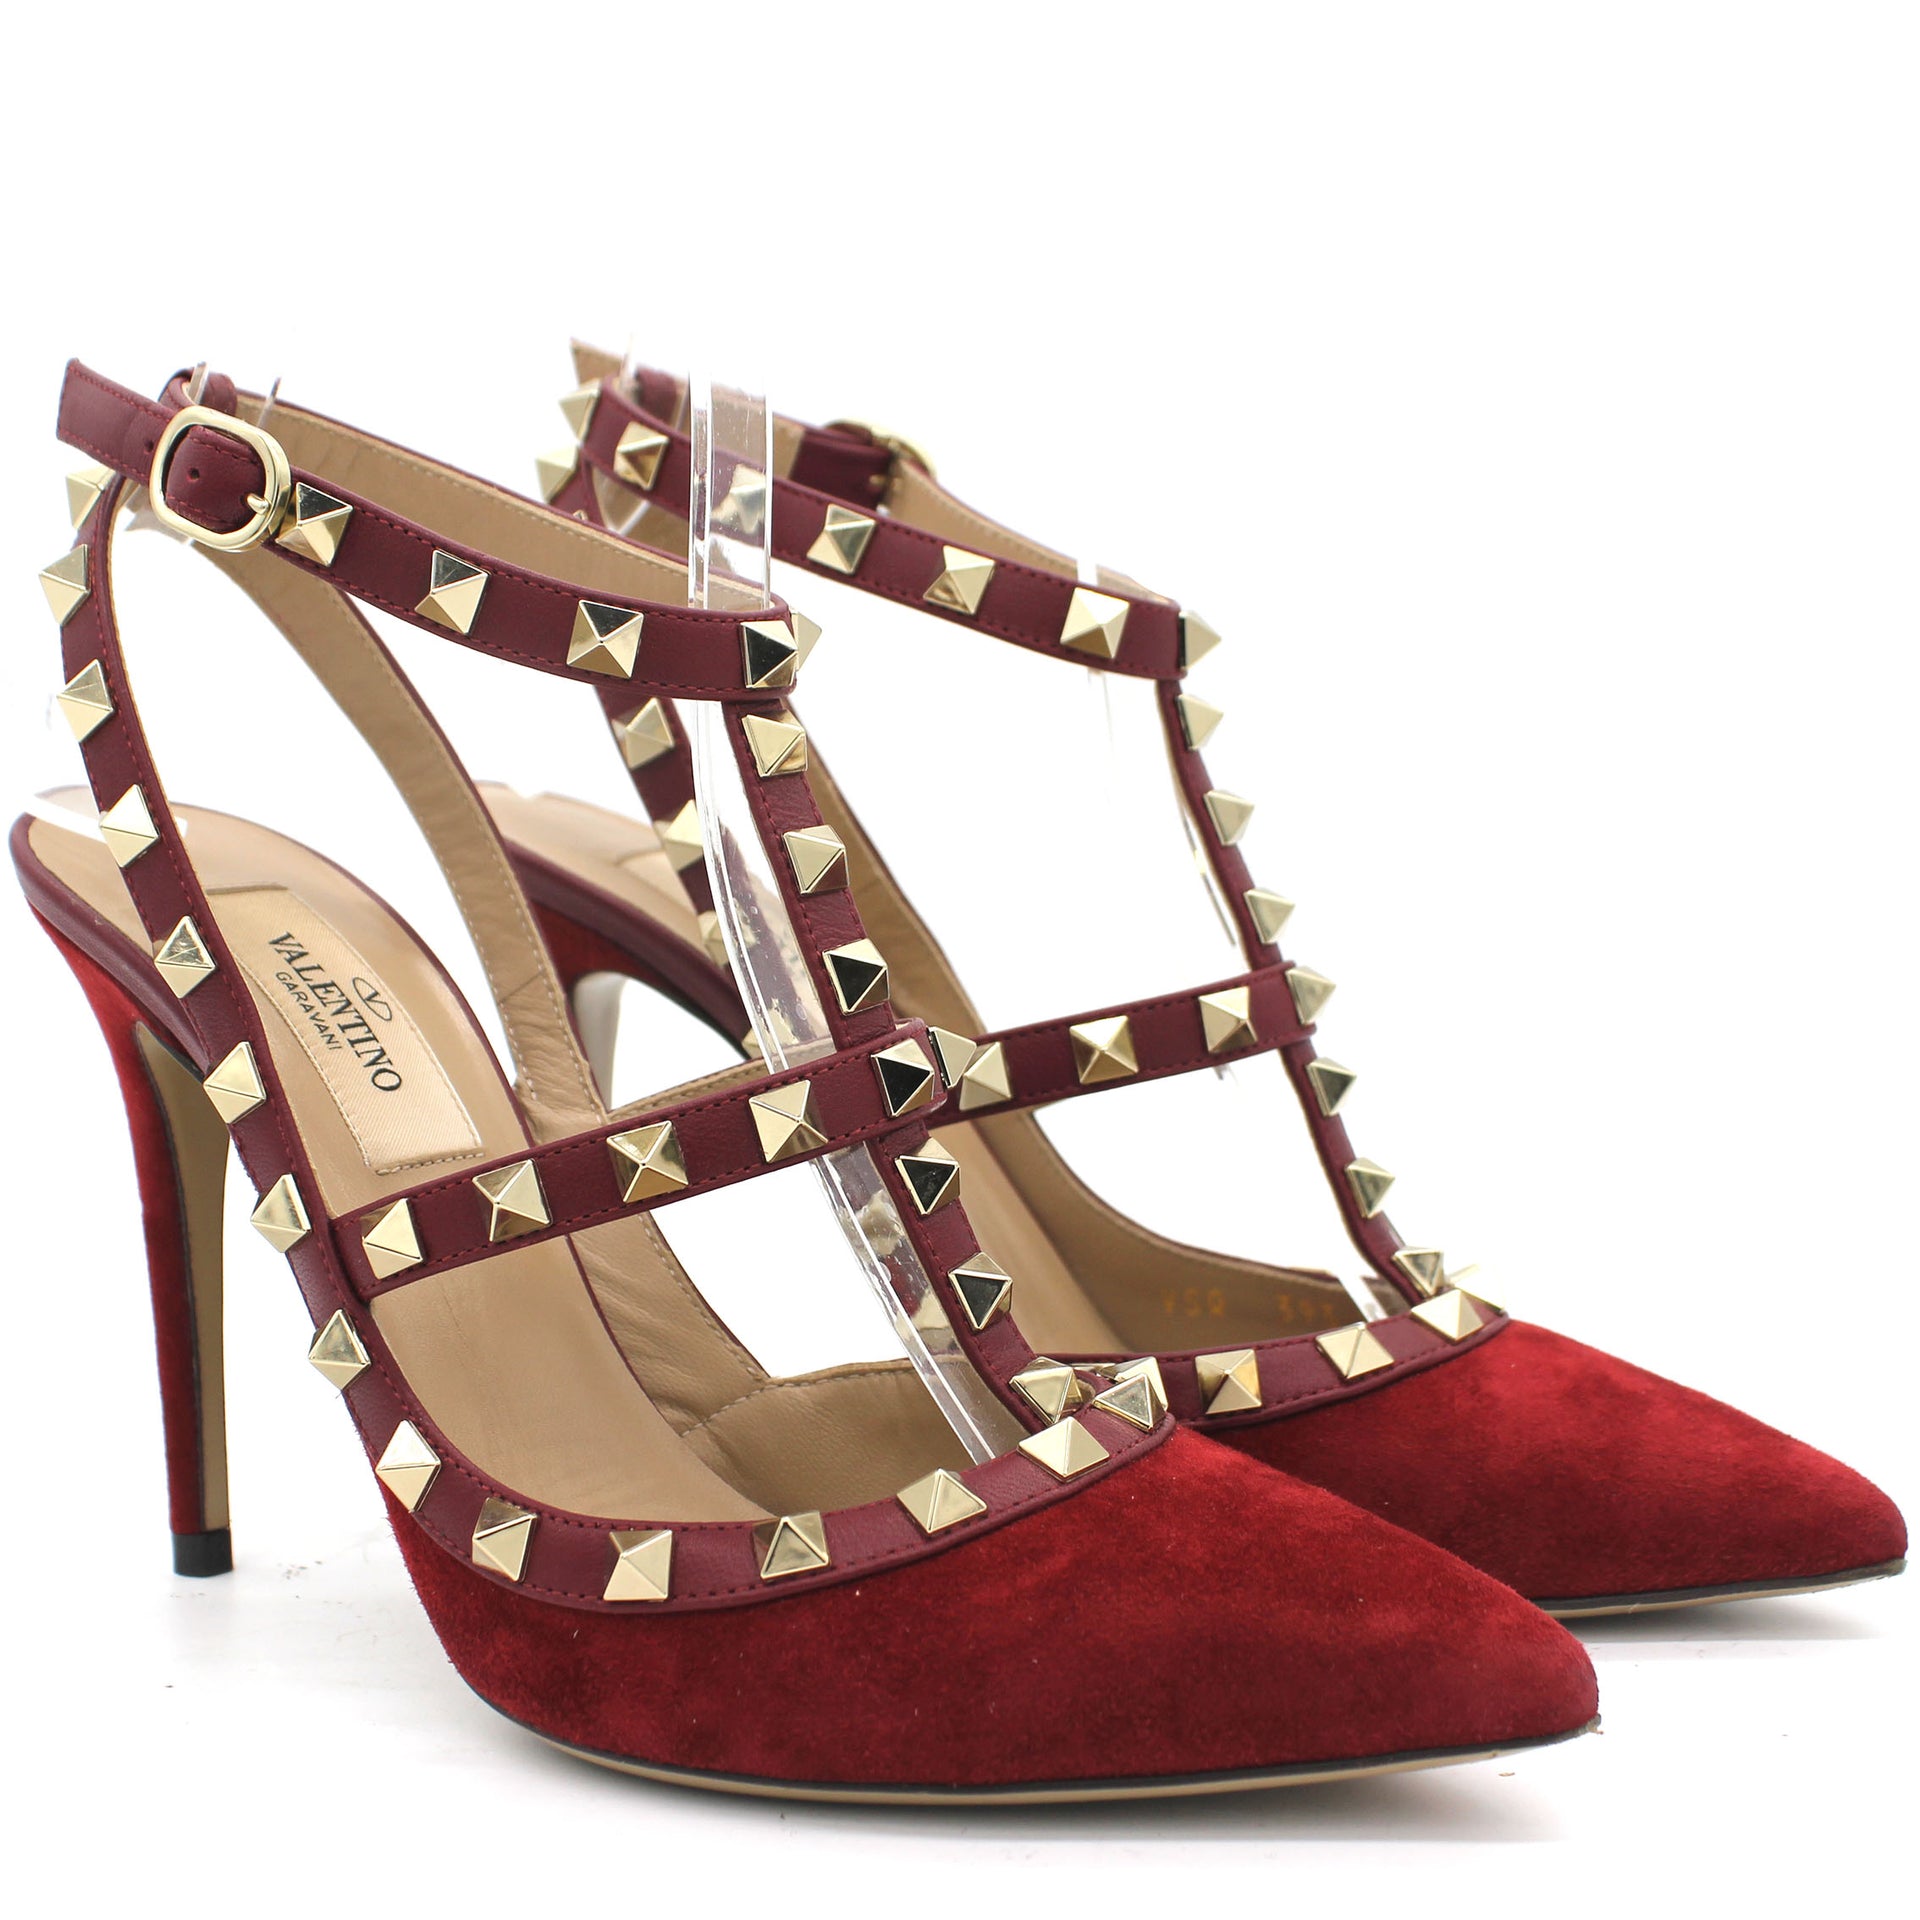 Valentino Rockstud Heels Review - The modern classic | Unwrapped | Valentino  rockstud heels, Rockstud heels, Valentino rockstud shoes